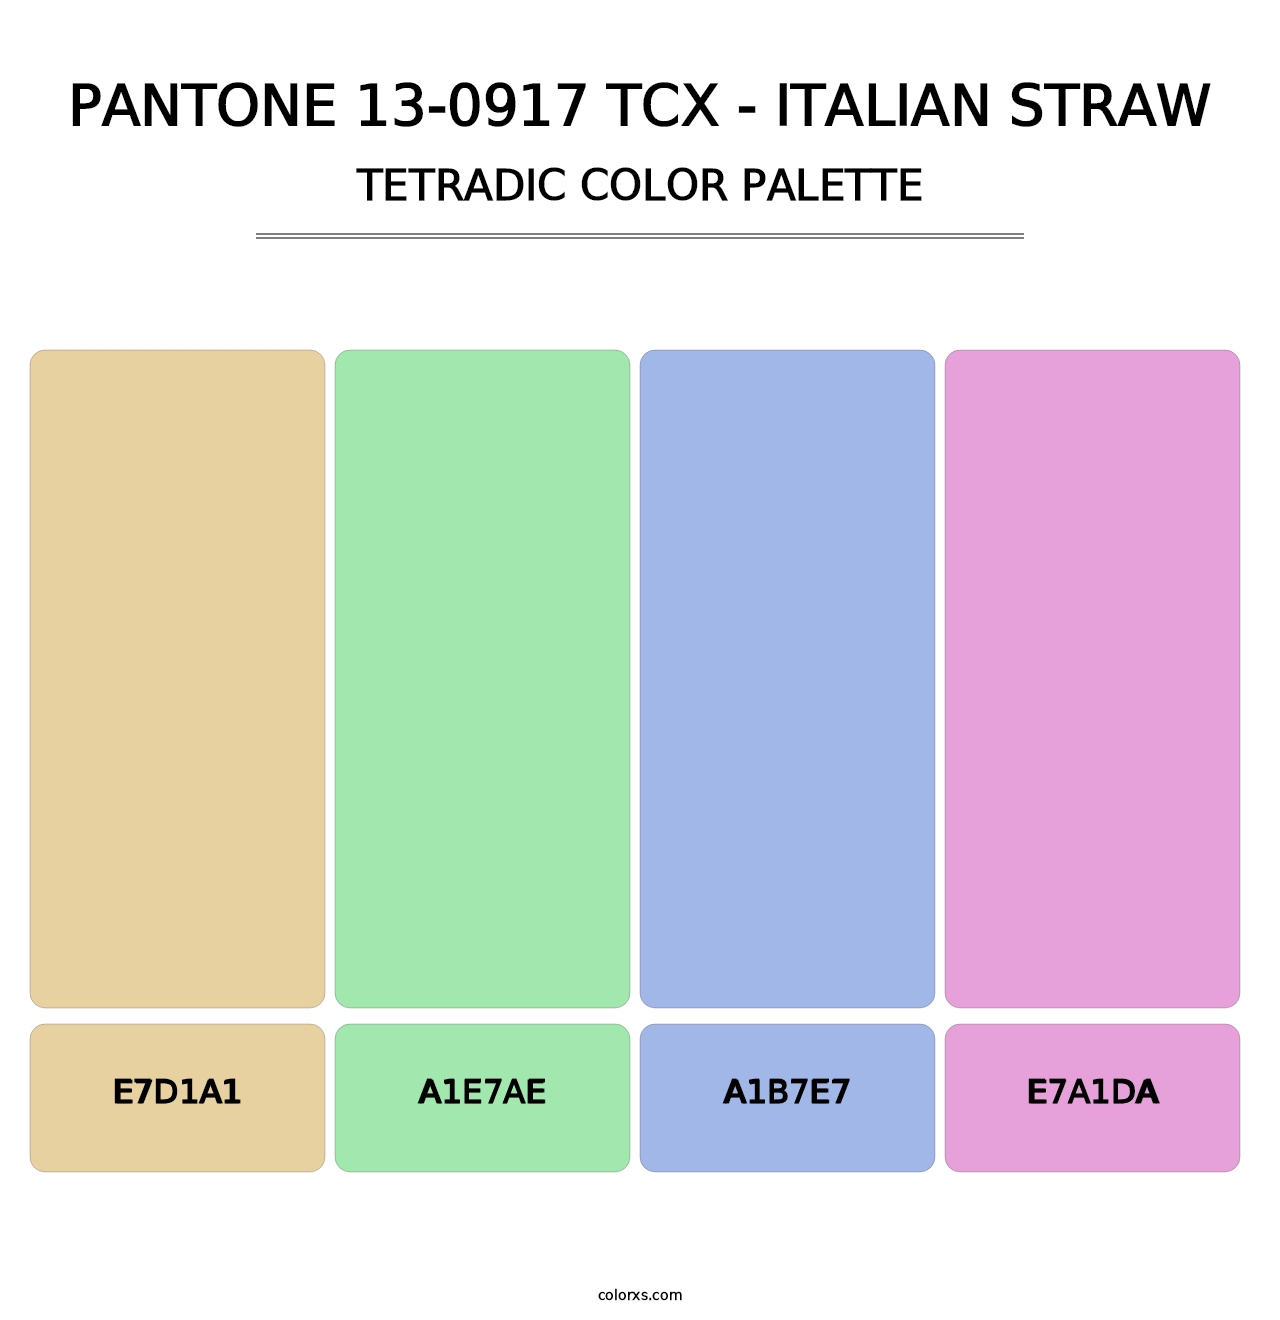 PANTONE 13-0917 TCX - Italian Straw - Tetradic Color Palette